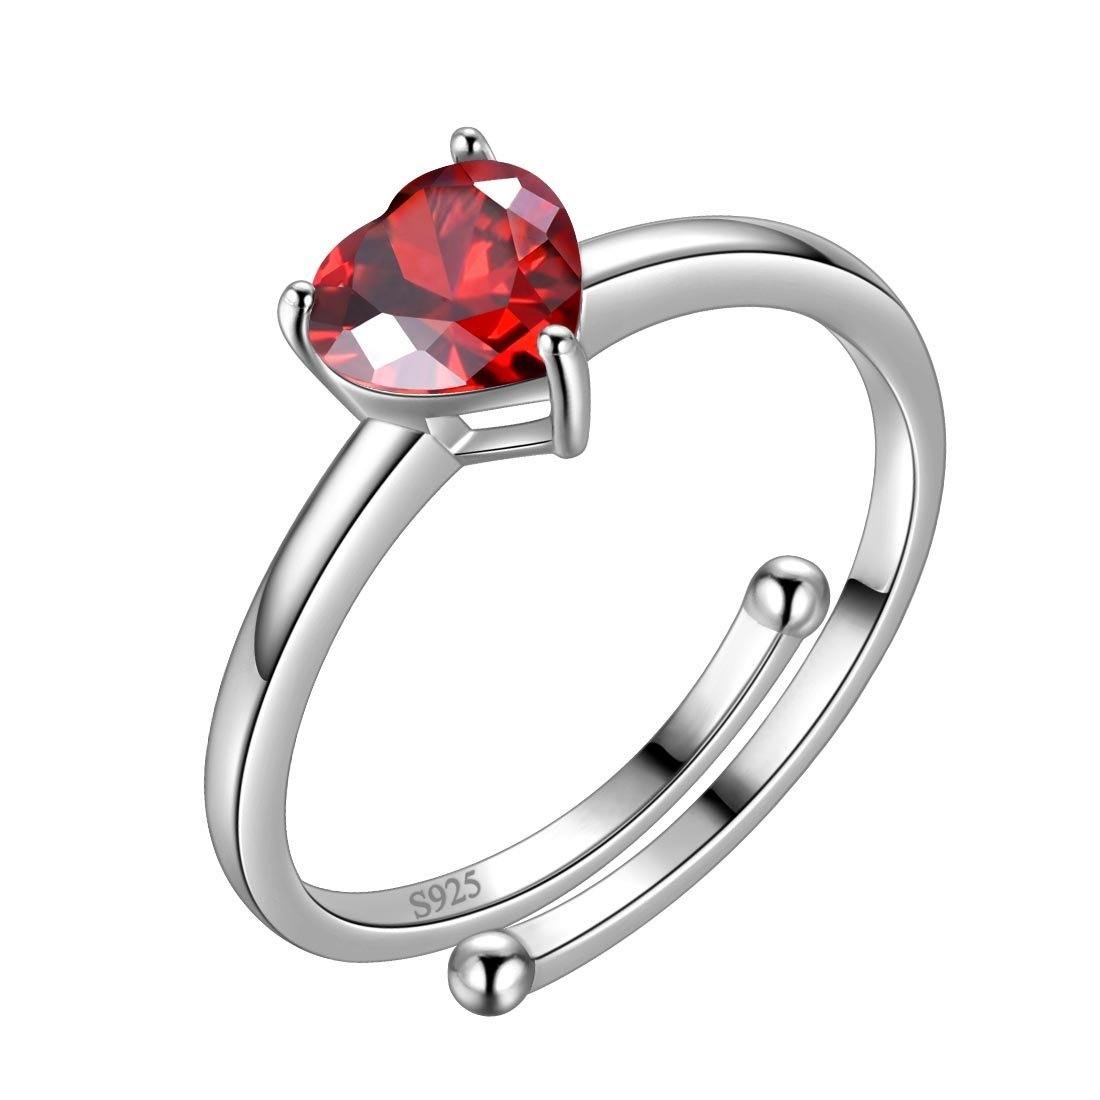 Birthstone Hearts Rings Adjustable Sterling Silver January-Garnet Aurora Tears Jewelry